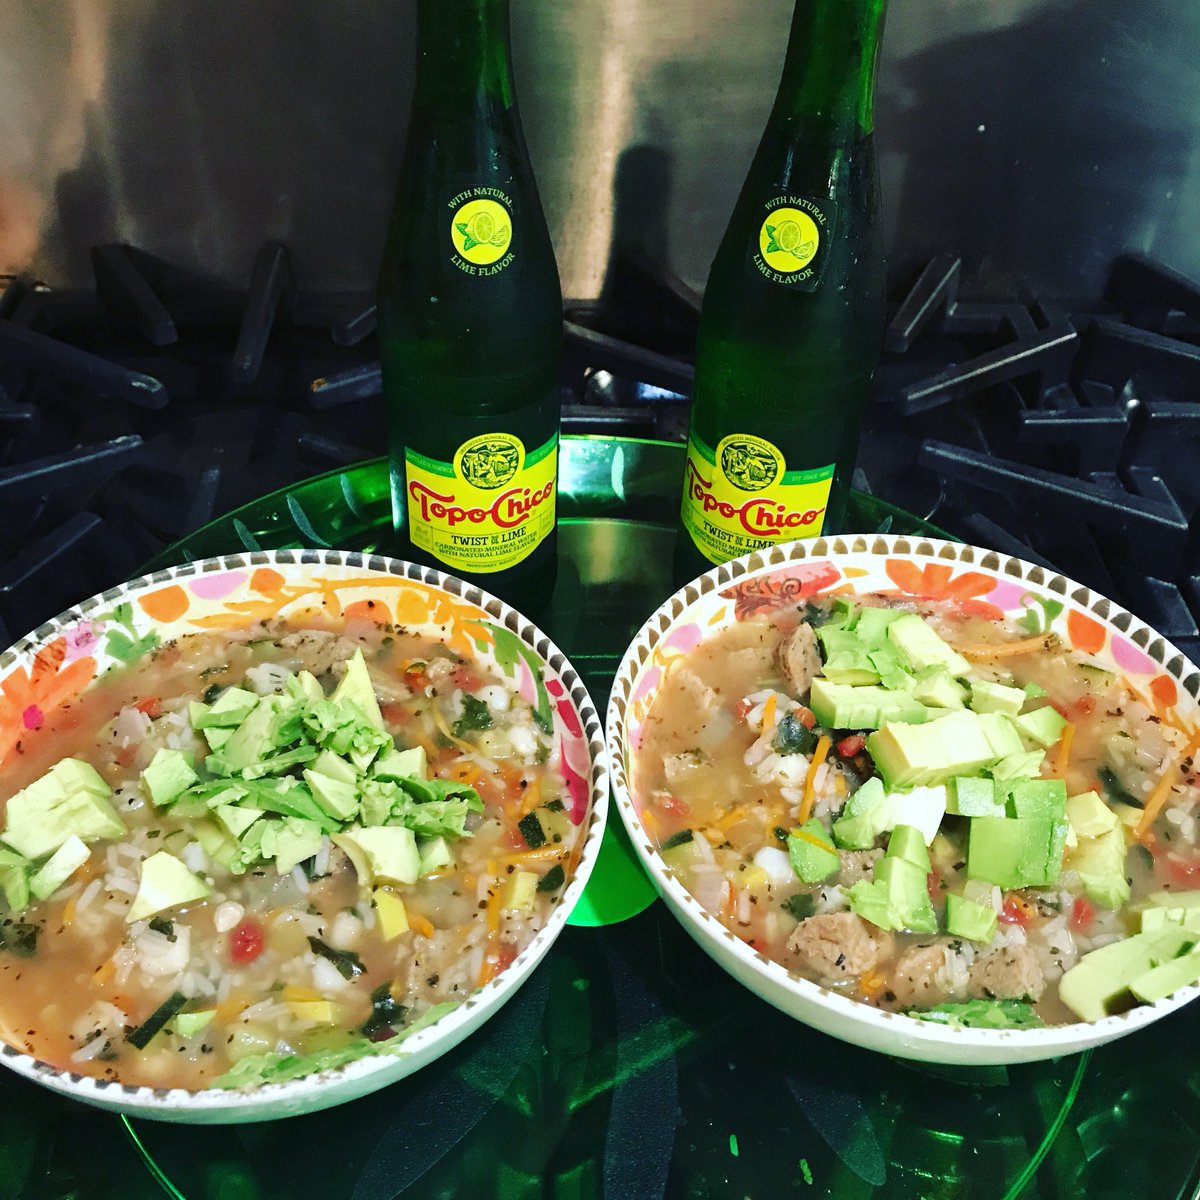 It’s so hard to be vegan. Nottttt. Loving my mom’s homemade Albondigas Soup paired with delicious Topo Chico 🍜 🌱 #crueltyfree #compassionateteen #vegansoup #whatveganseat #bethechange #animalfree #letthemlive #teenactivist